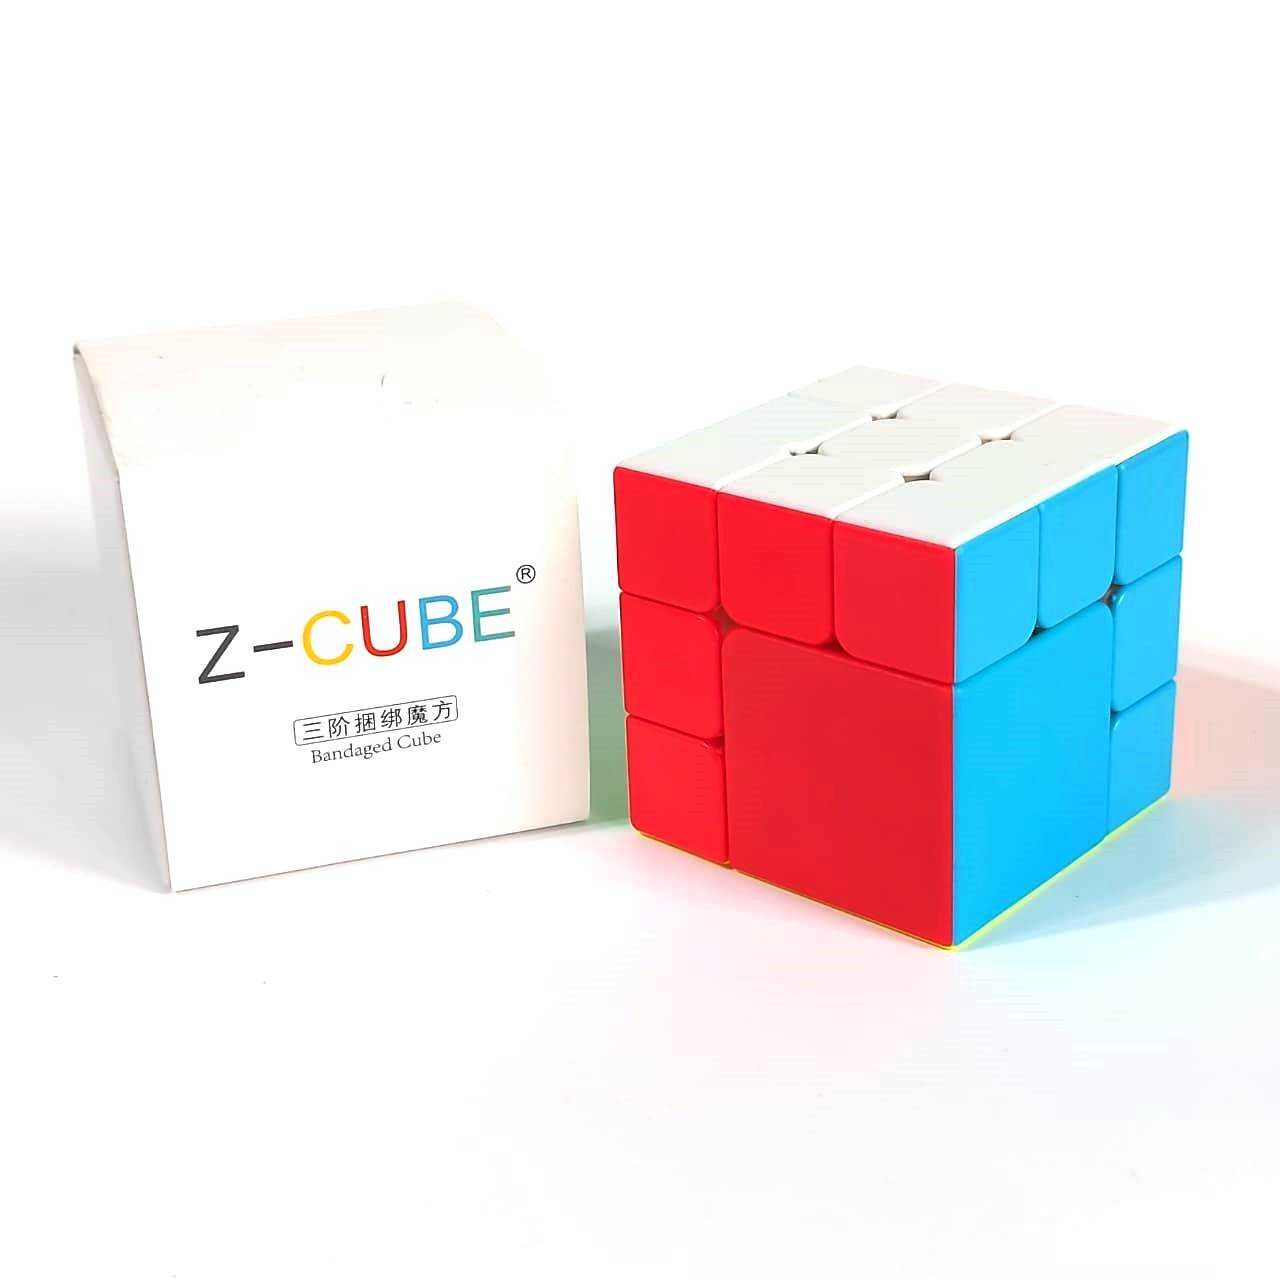 Z-cube Bandaged Cube 3x3 A 51677